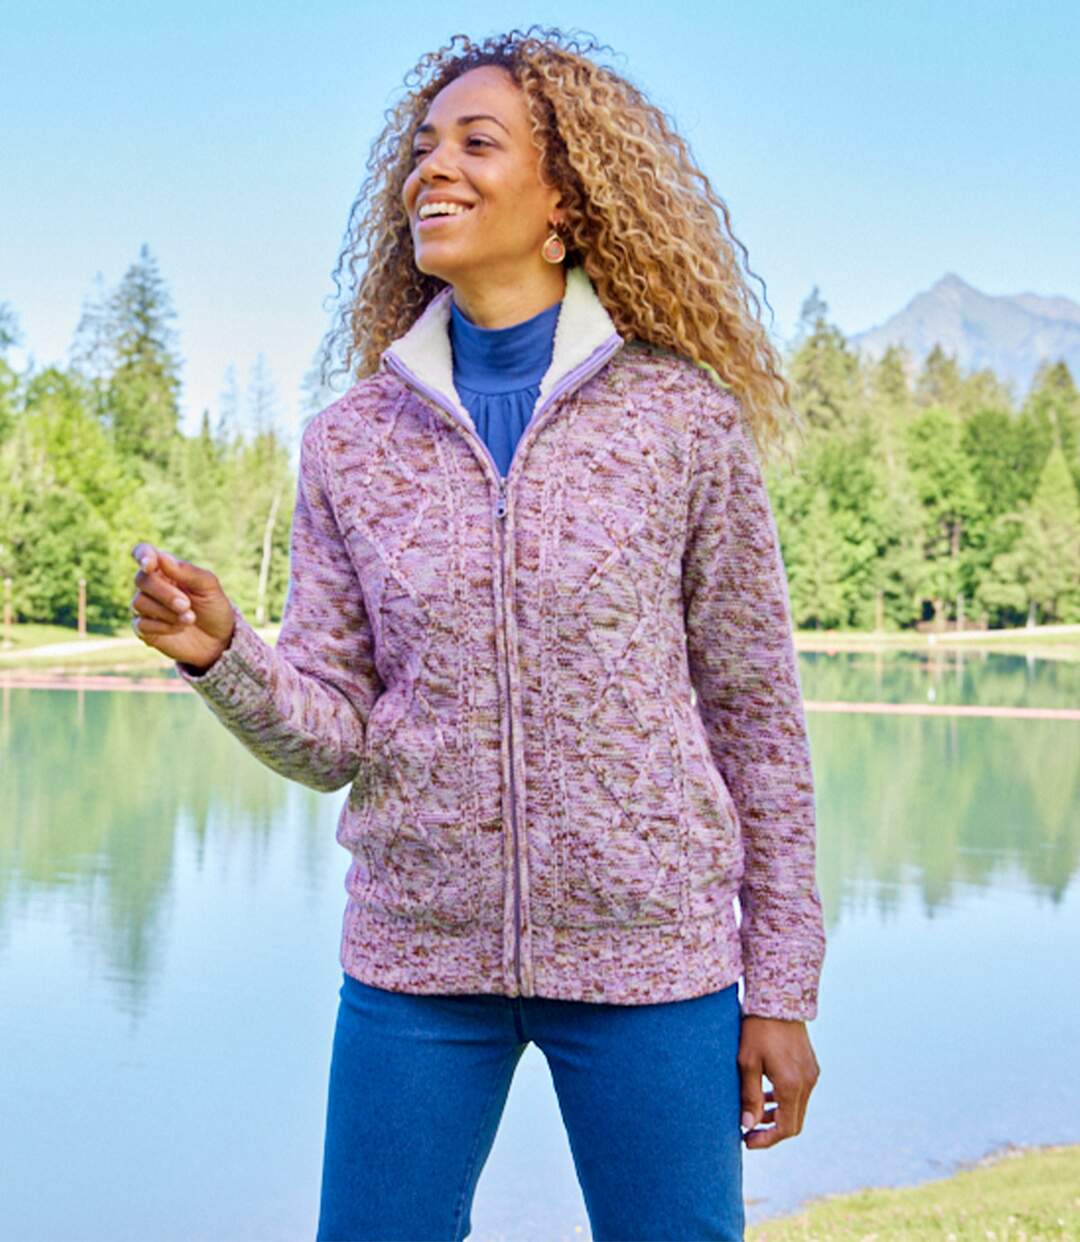 Women's Mottled Knitted Jacket - Lavender Ecru Coral Atlas For Men